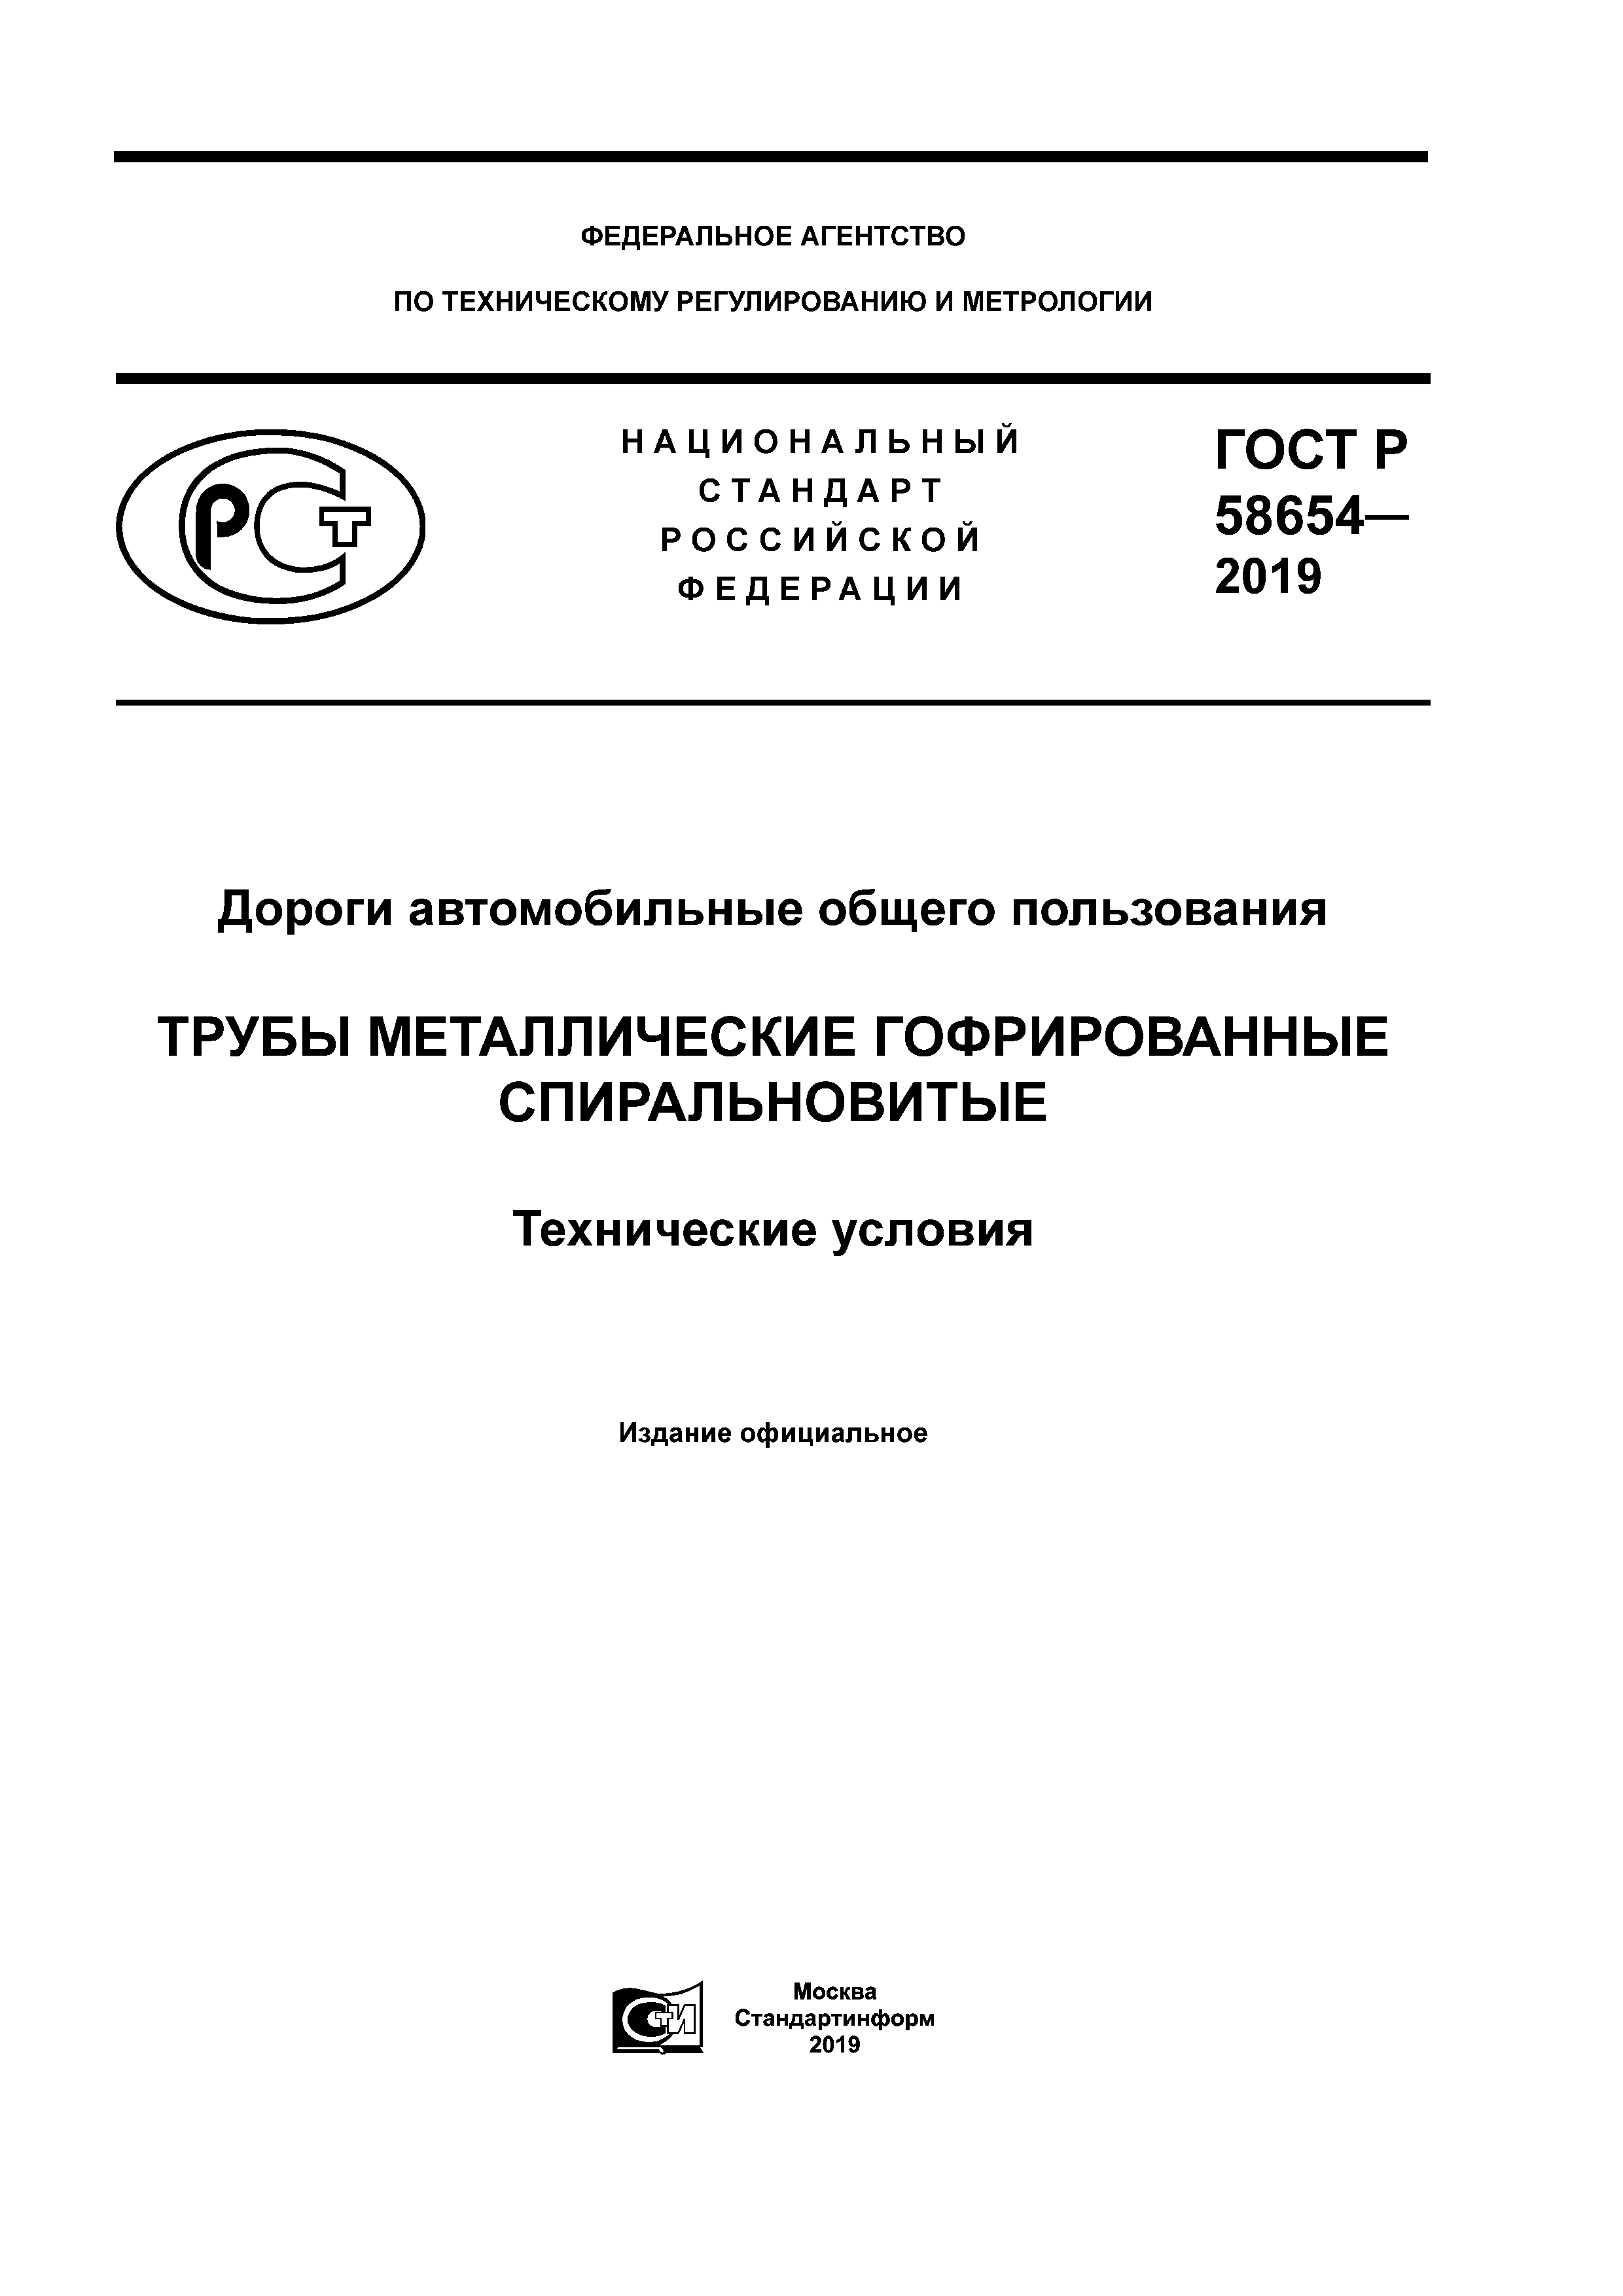 ГОСТ Р 58654-2019